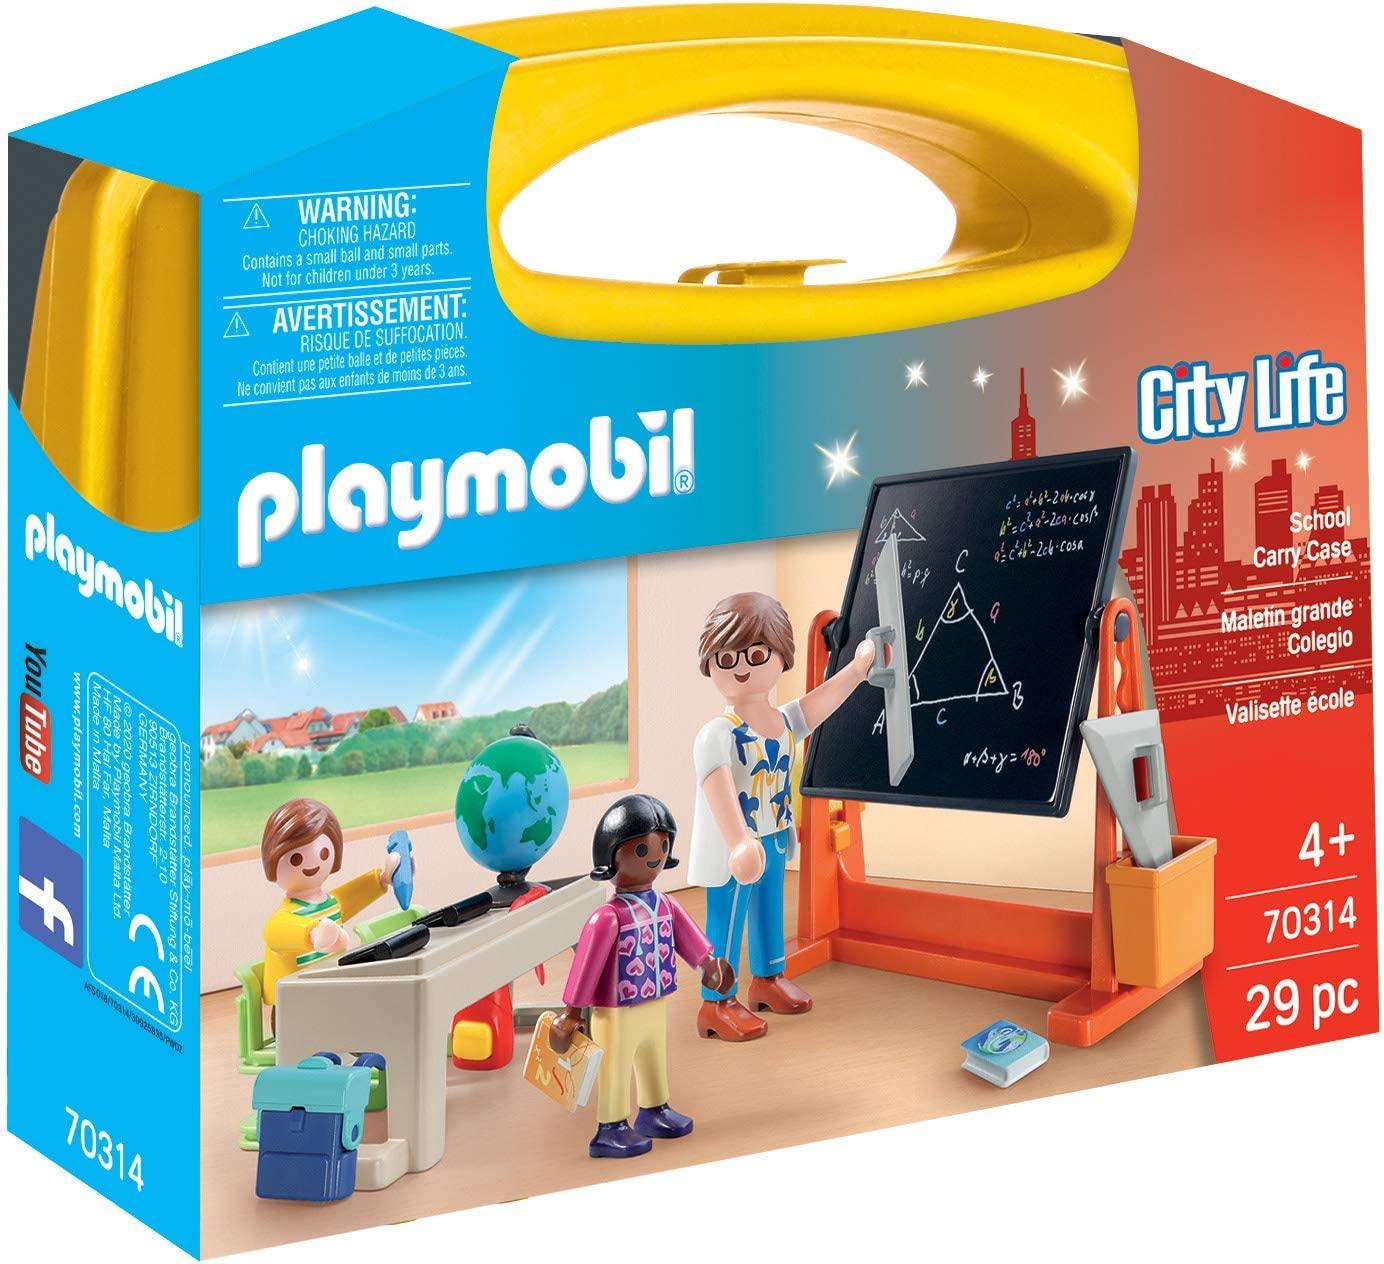 Playmobil City Life 70314 School Carry Case